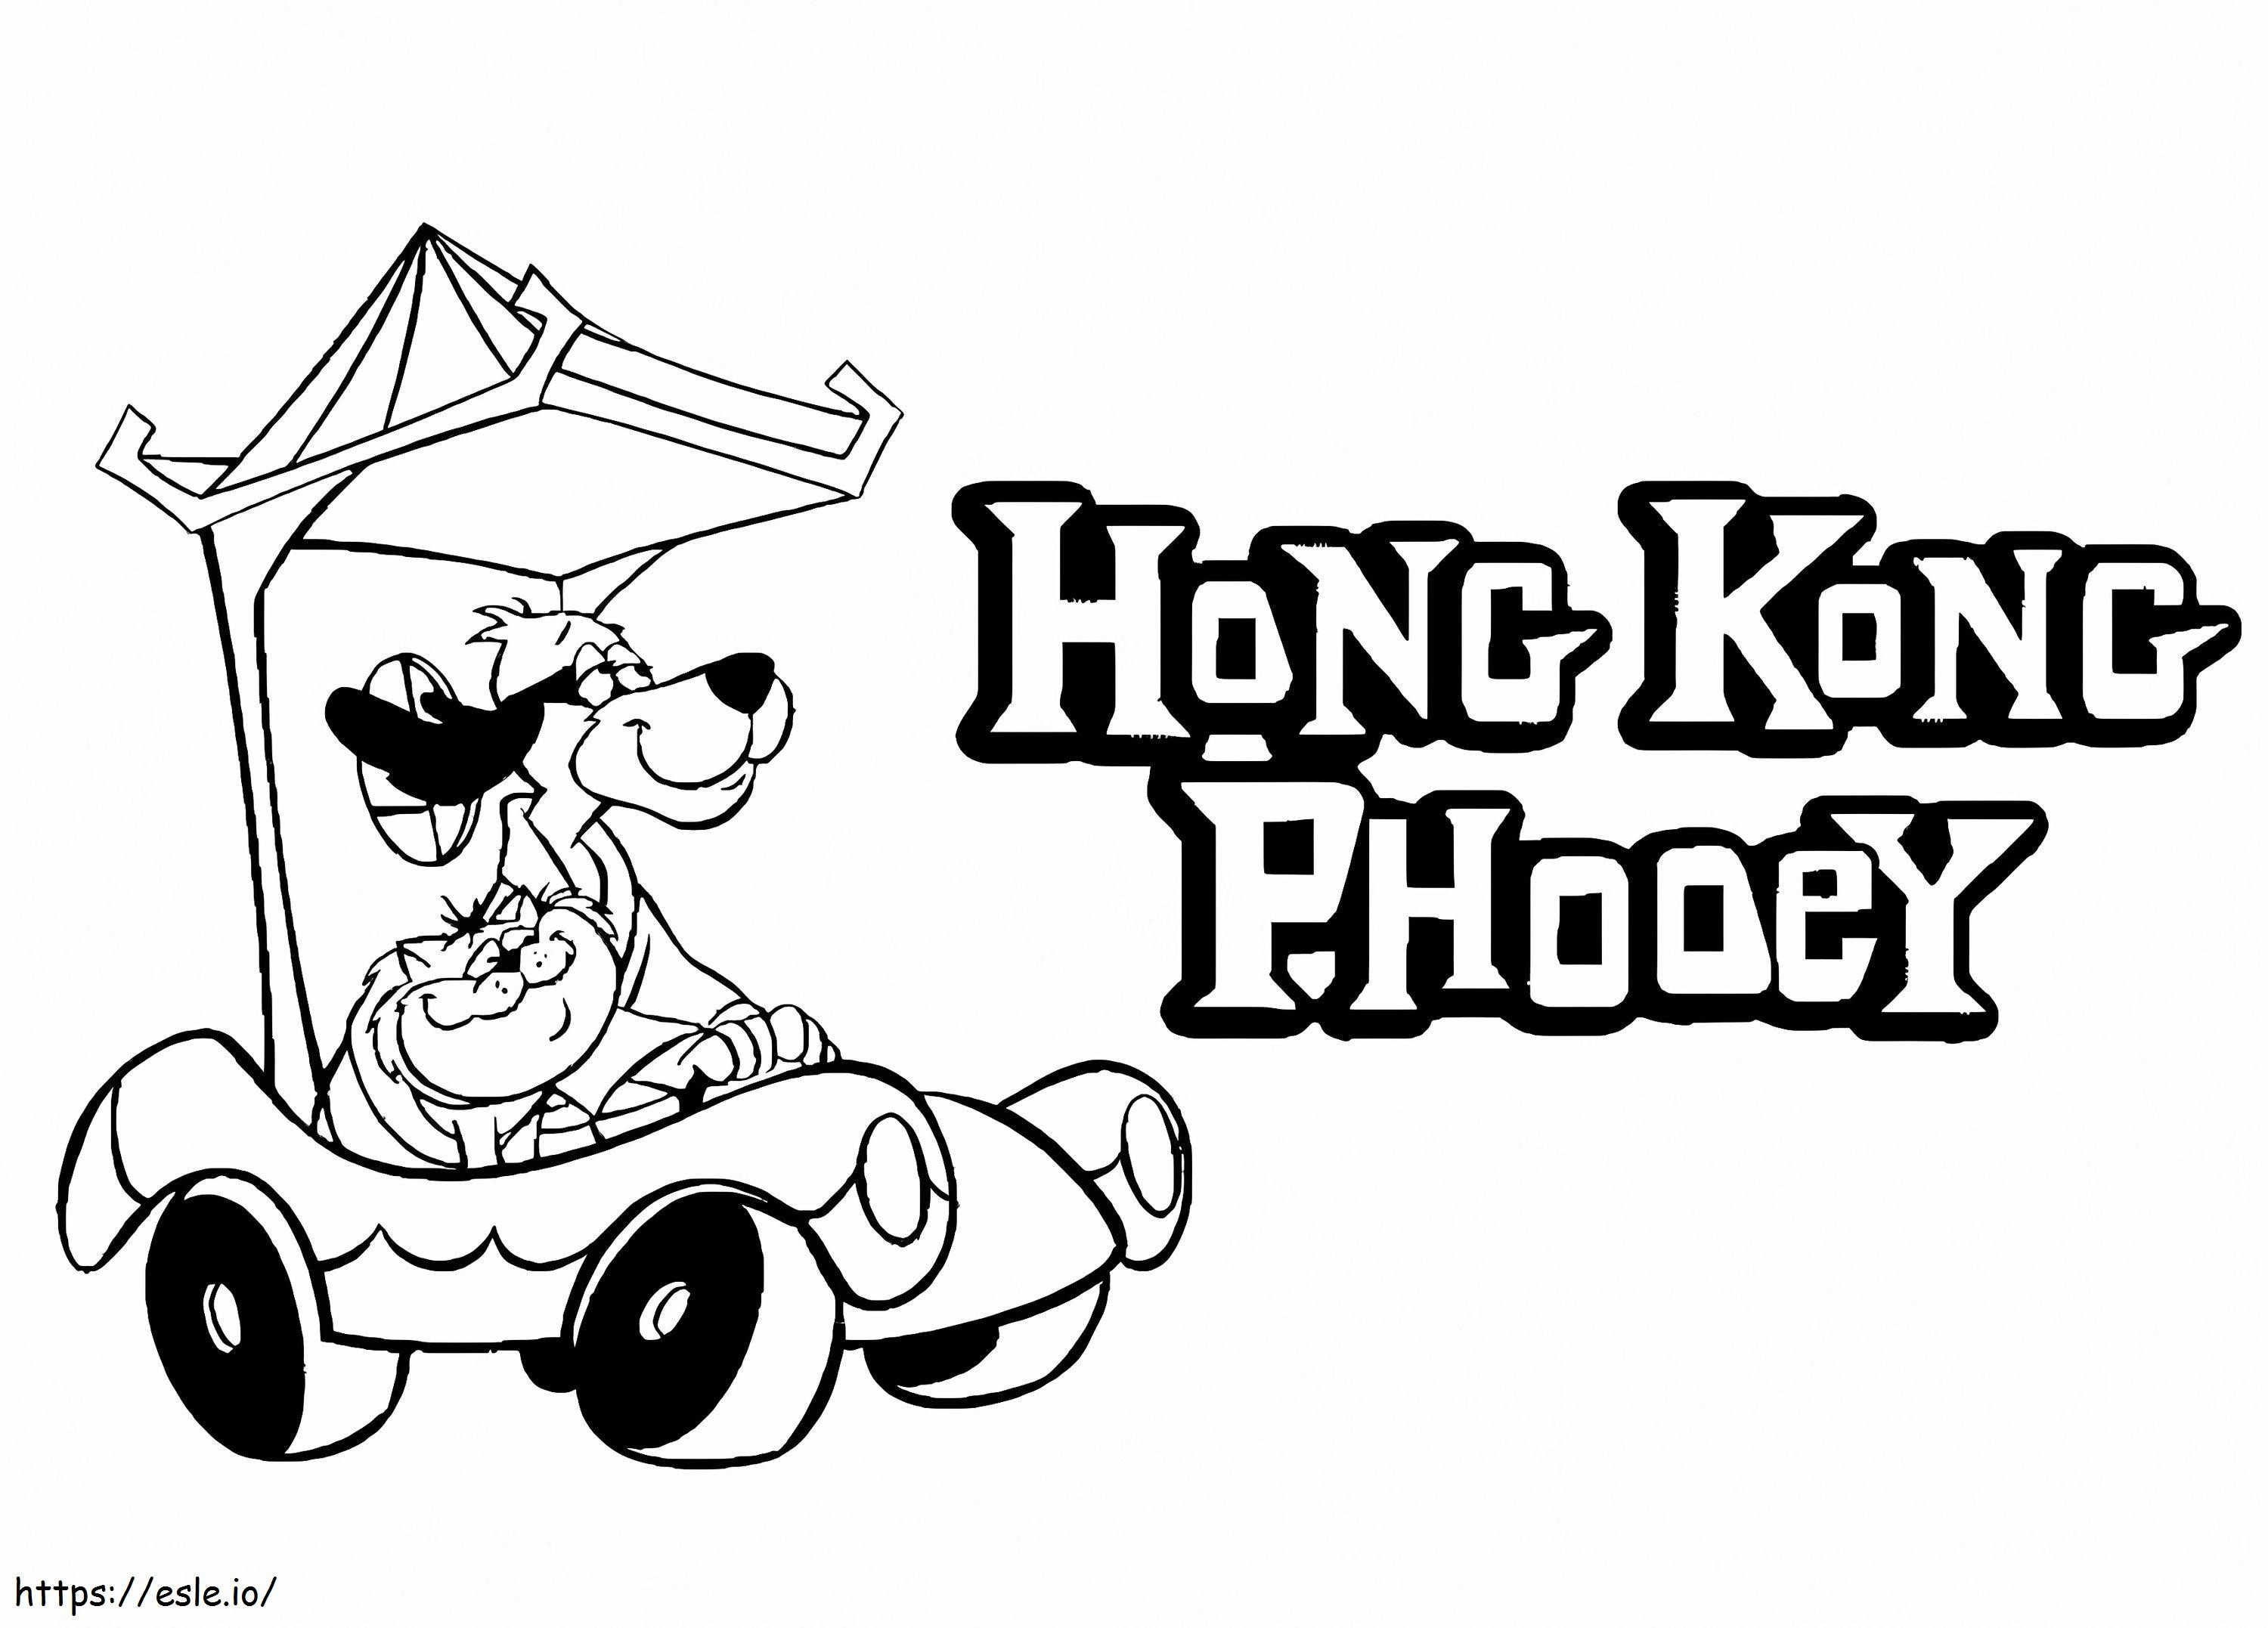 Tempat Dengan Hong Kong Phooey Gambar Mewarnai